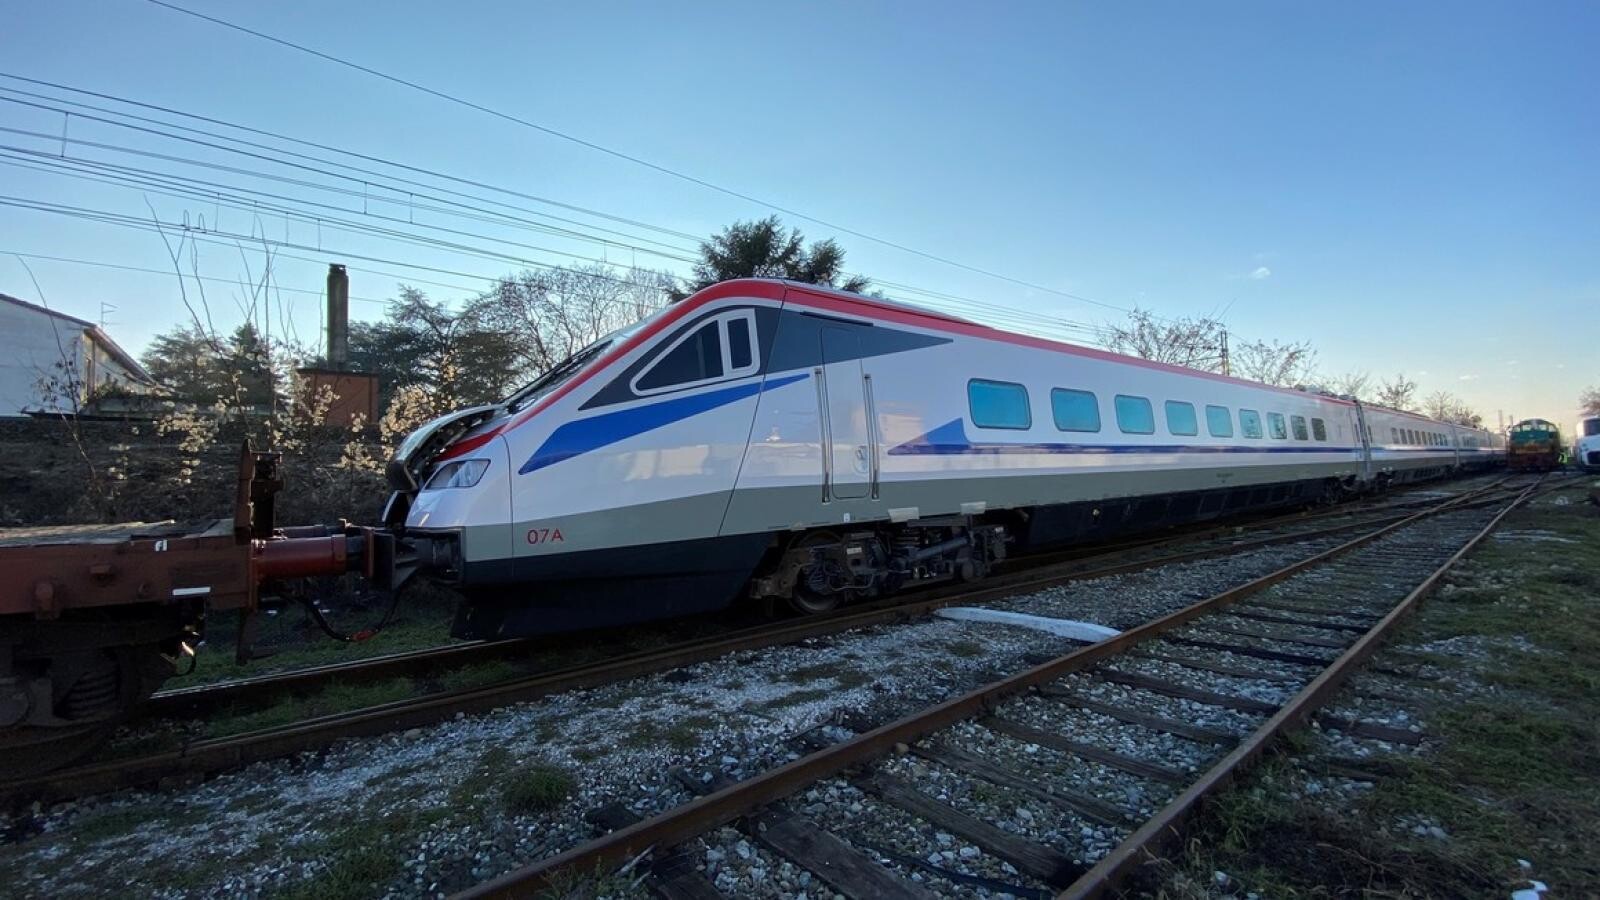 More information about "Λευκό Βέλος αμαξοστοιχία ETR470: Bίντεο από το πρώτο δρομολόγιο των νέων τρένων"